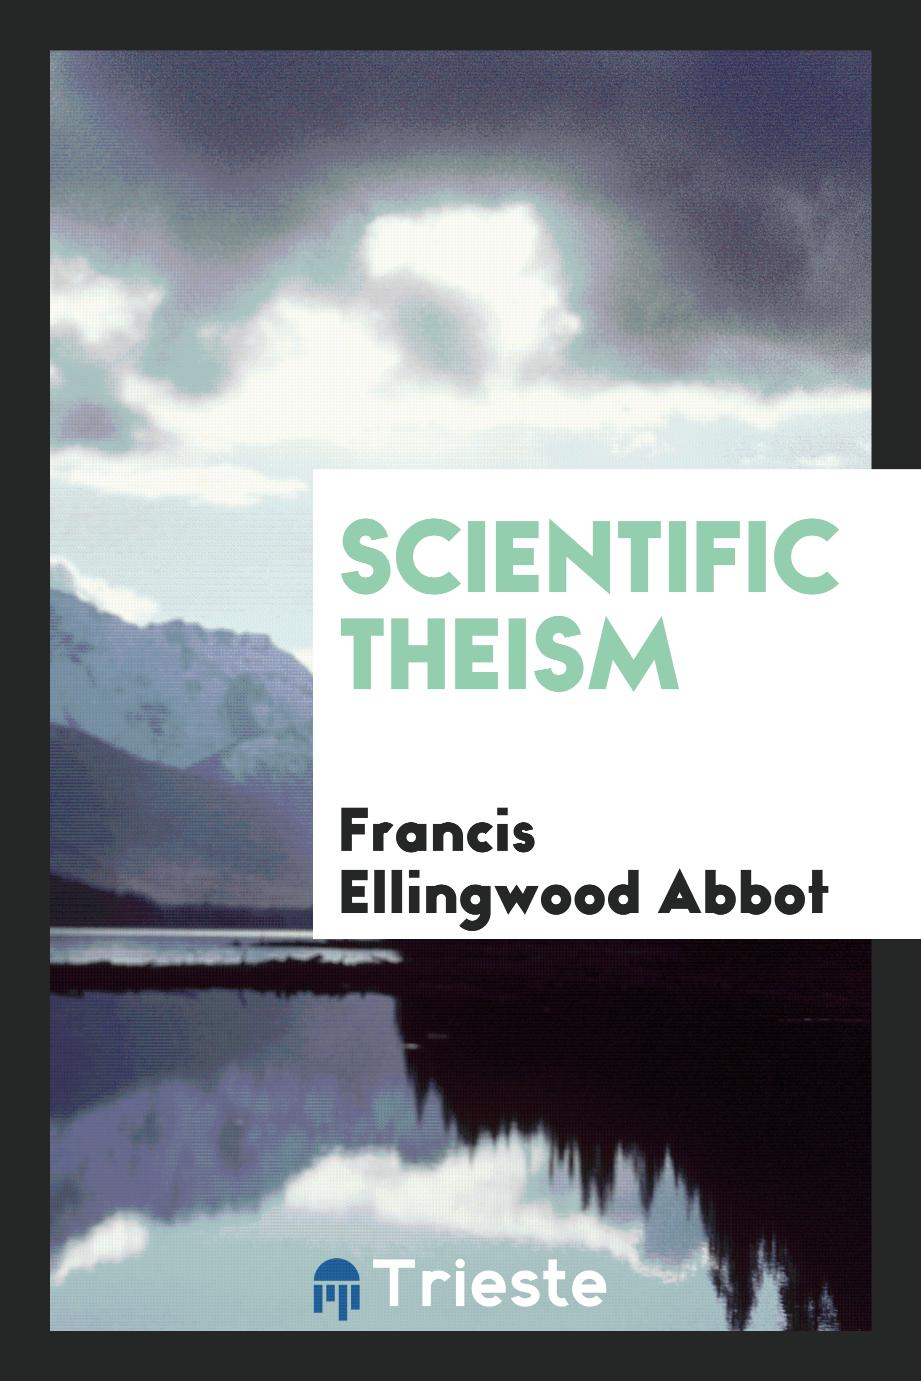 Scientific theism